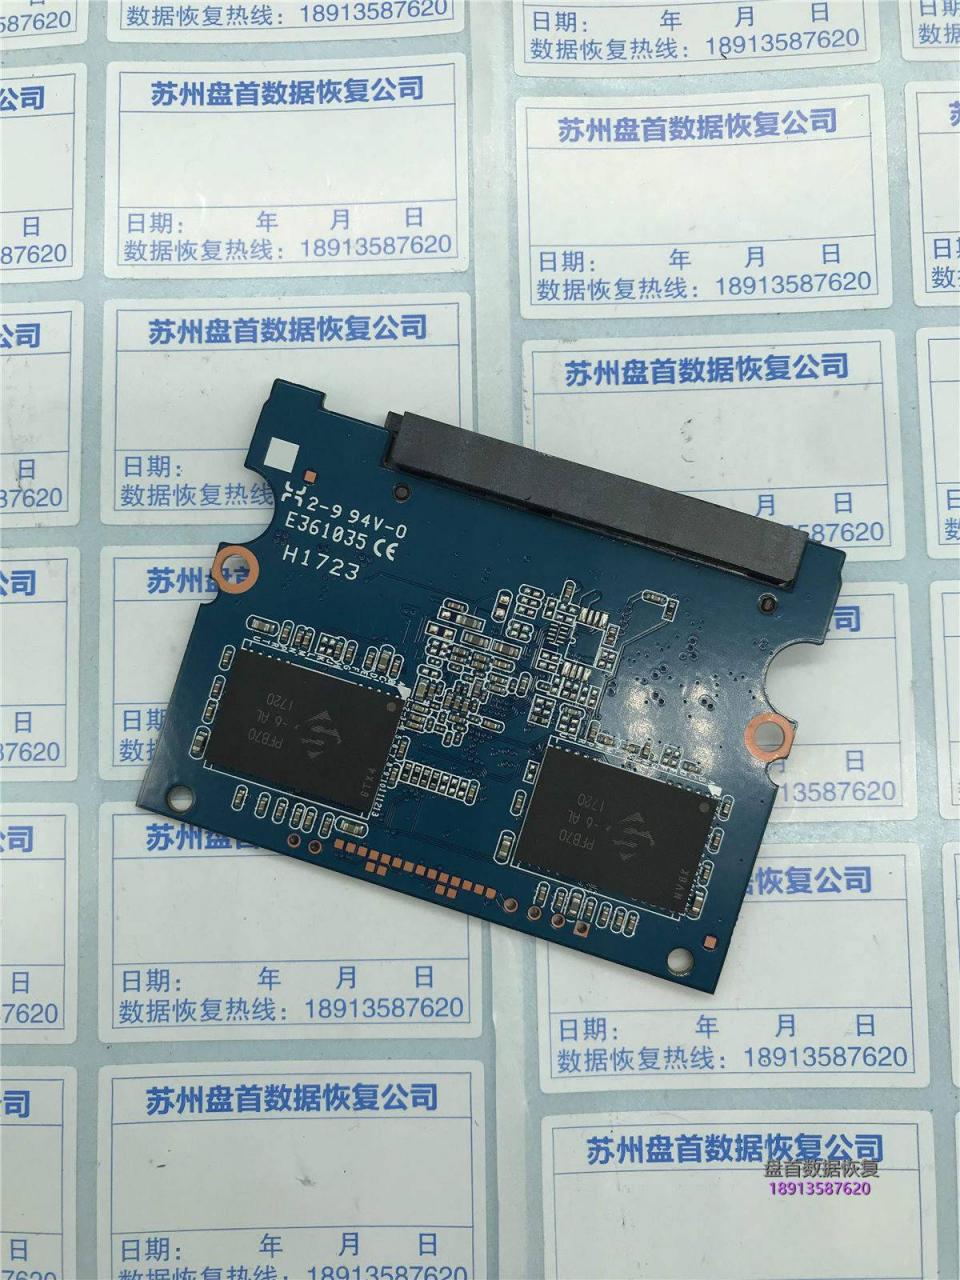 PS3111芯片的SSD固件门通病常见掉盘故障现象